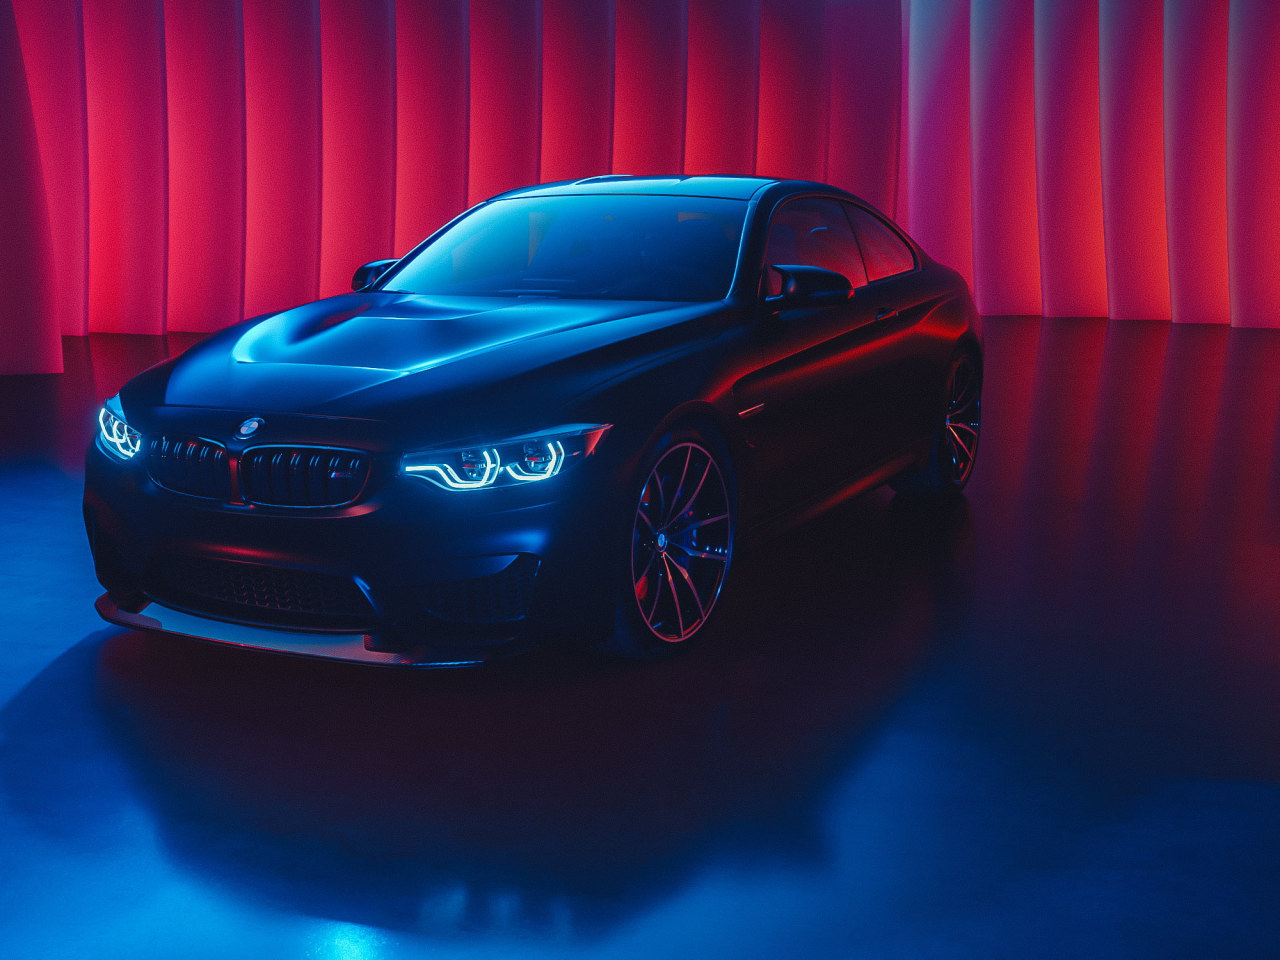 Black BMW Sedan, BMW M Car, Cyan, Blue, Red, Glowing, Black Cars Wallpaper • Wallpaper For You